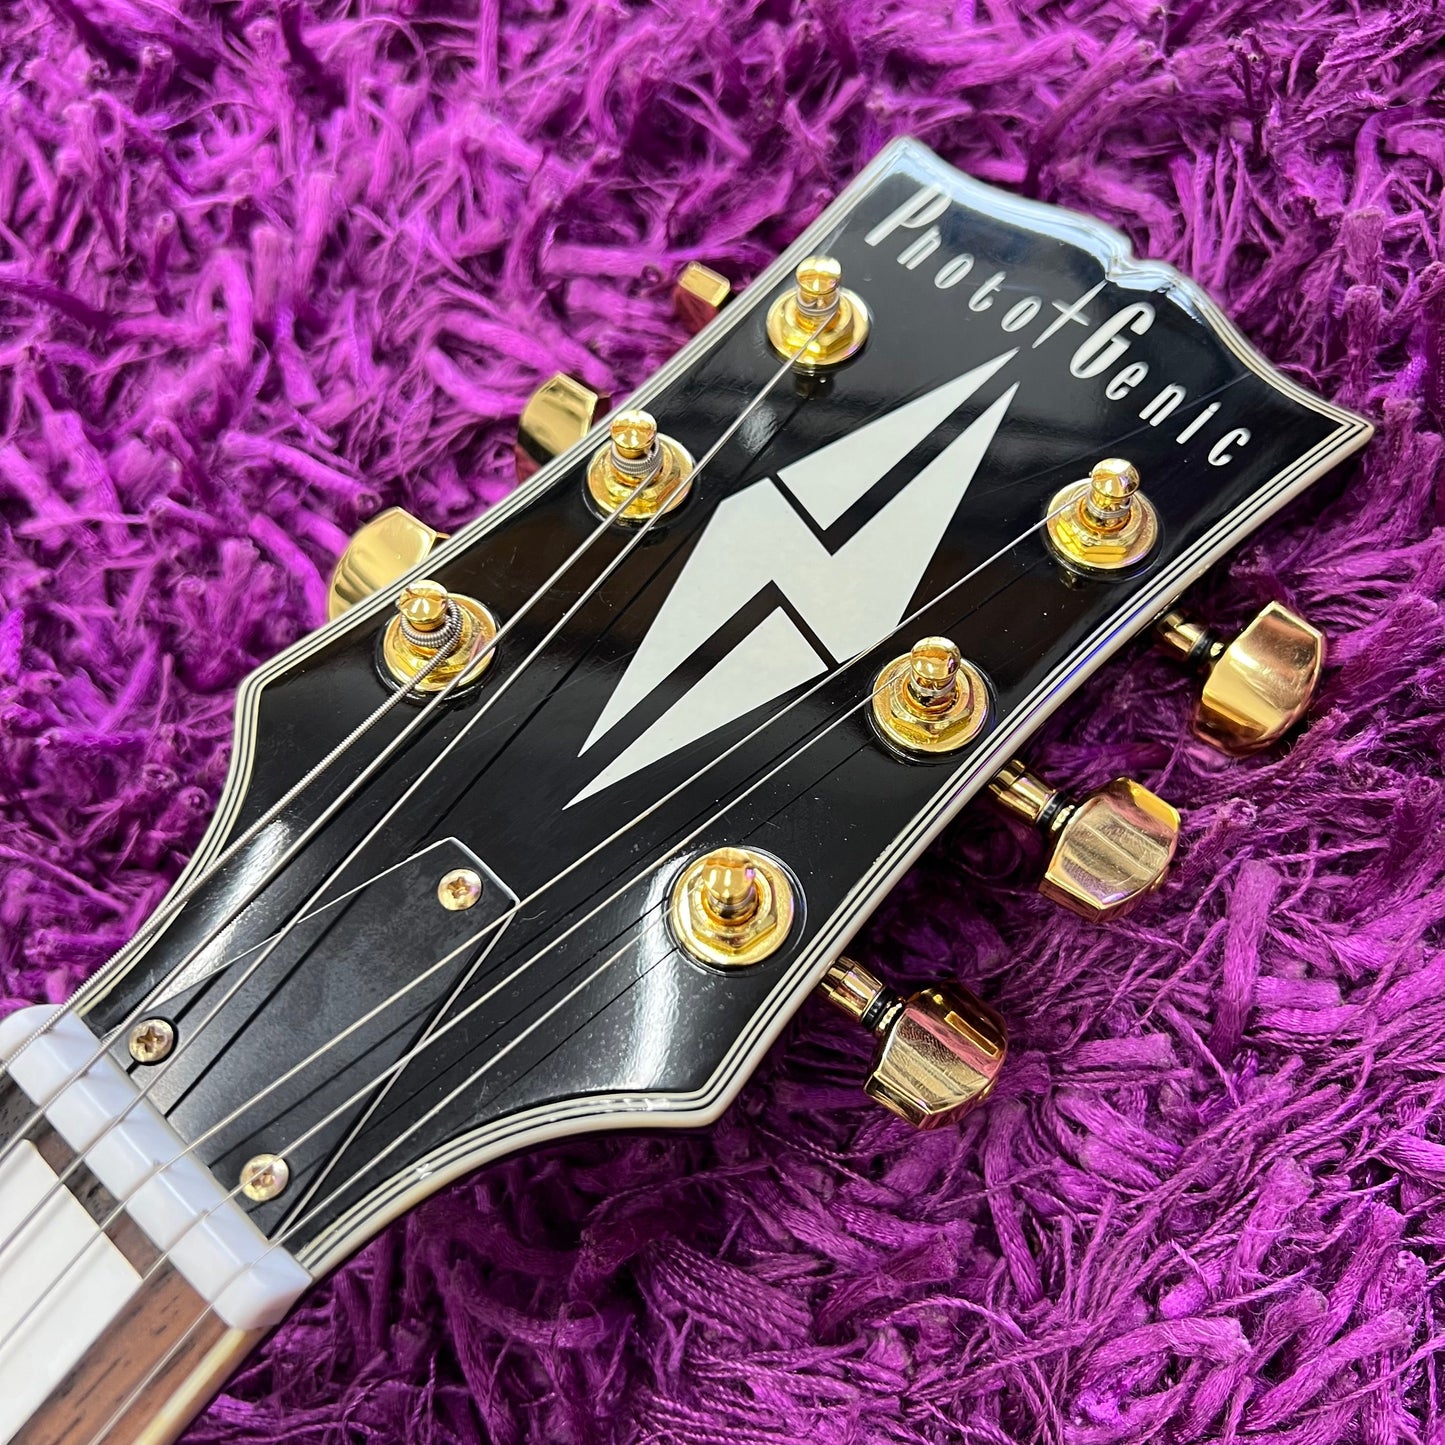 PhotoGenic LP-300 Les Paul Custom Style Electric Guitar Black Beauty